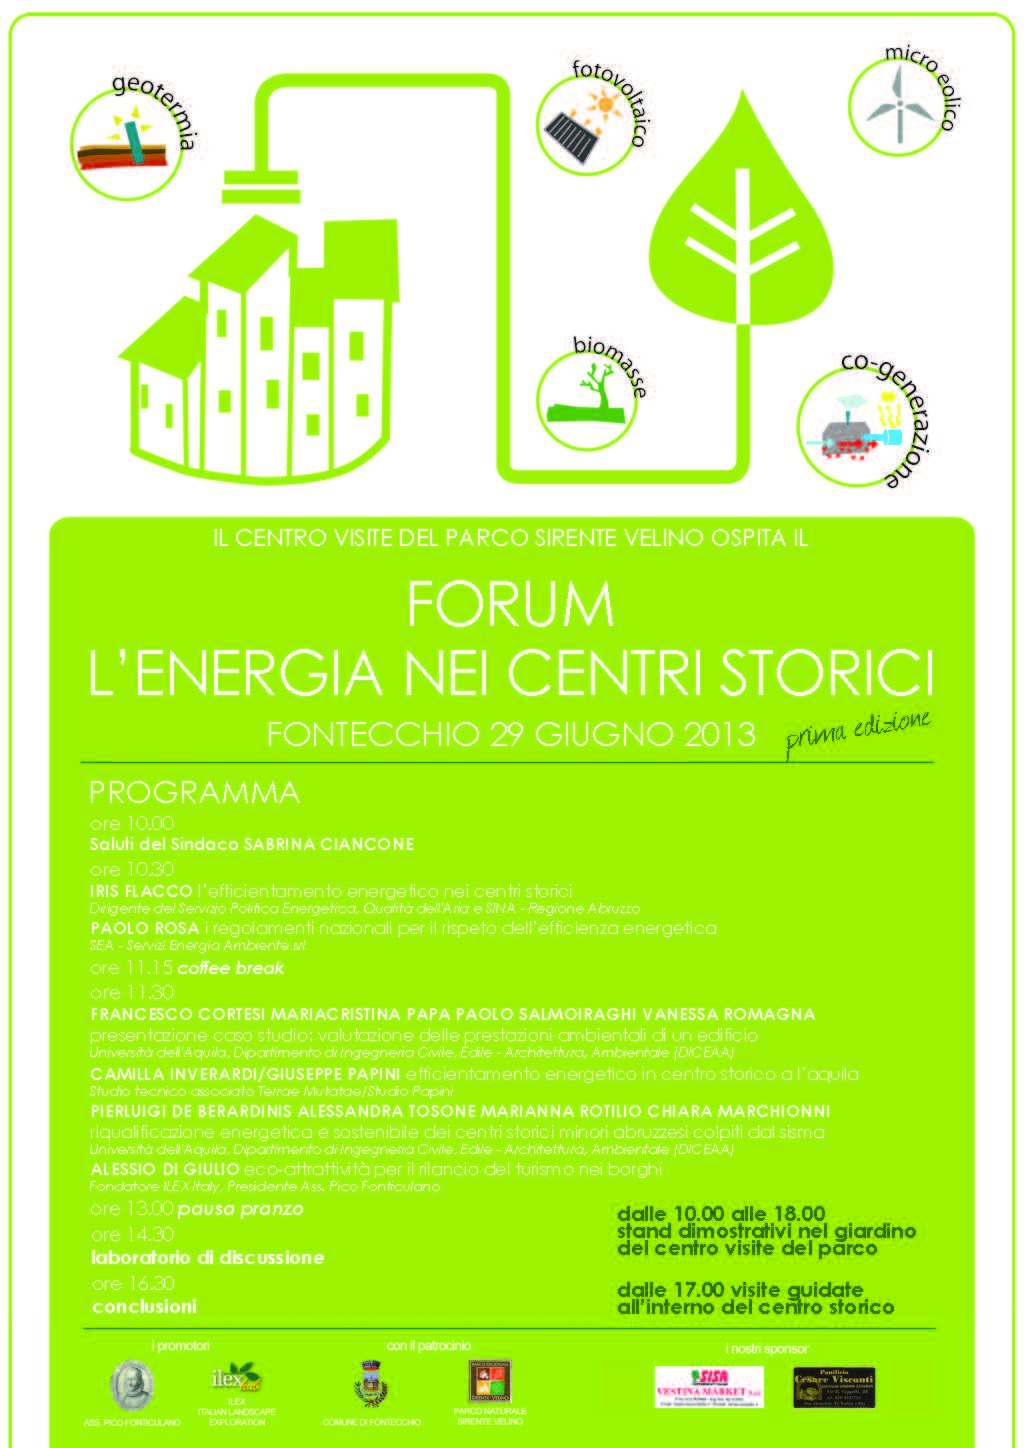 Forum sull’Energia nei Centri Storici